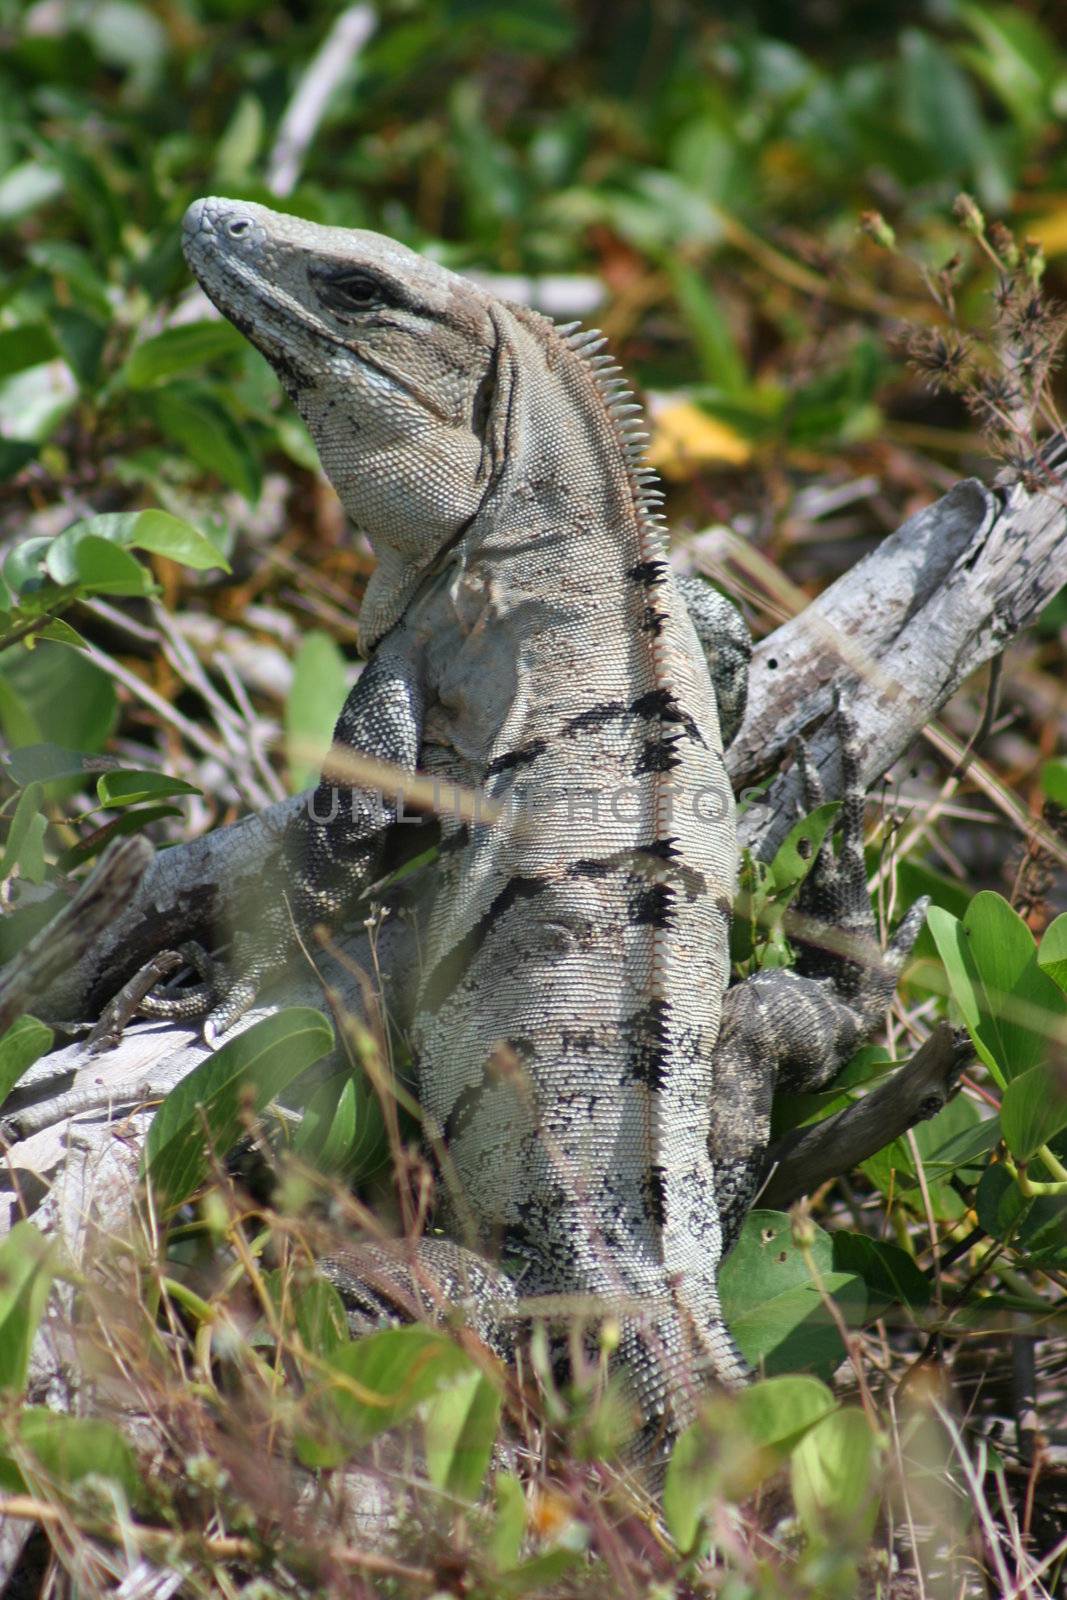 Mexican Iguana